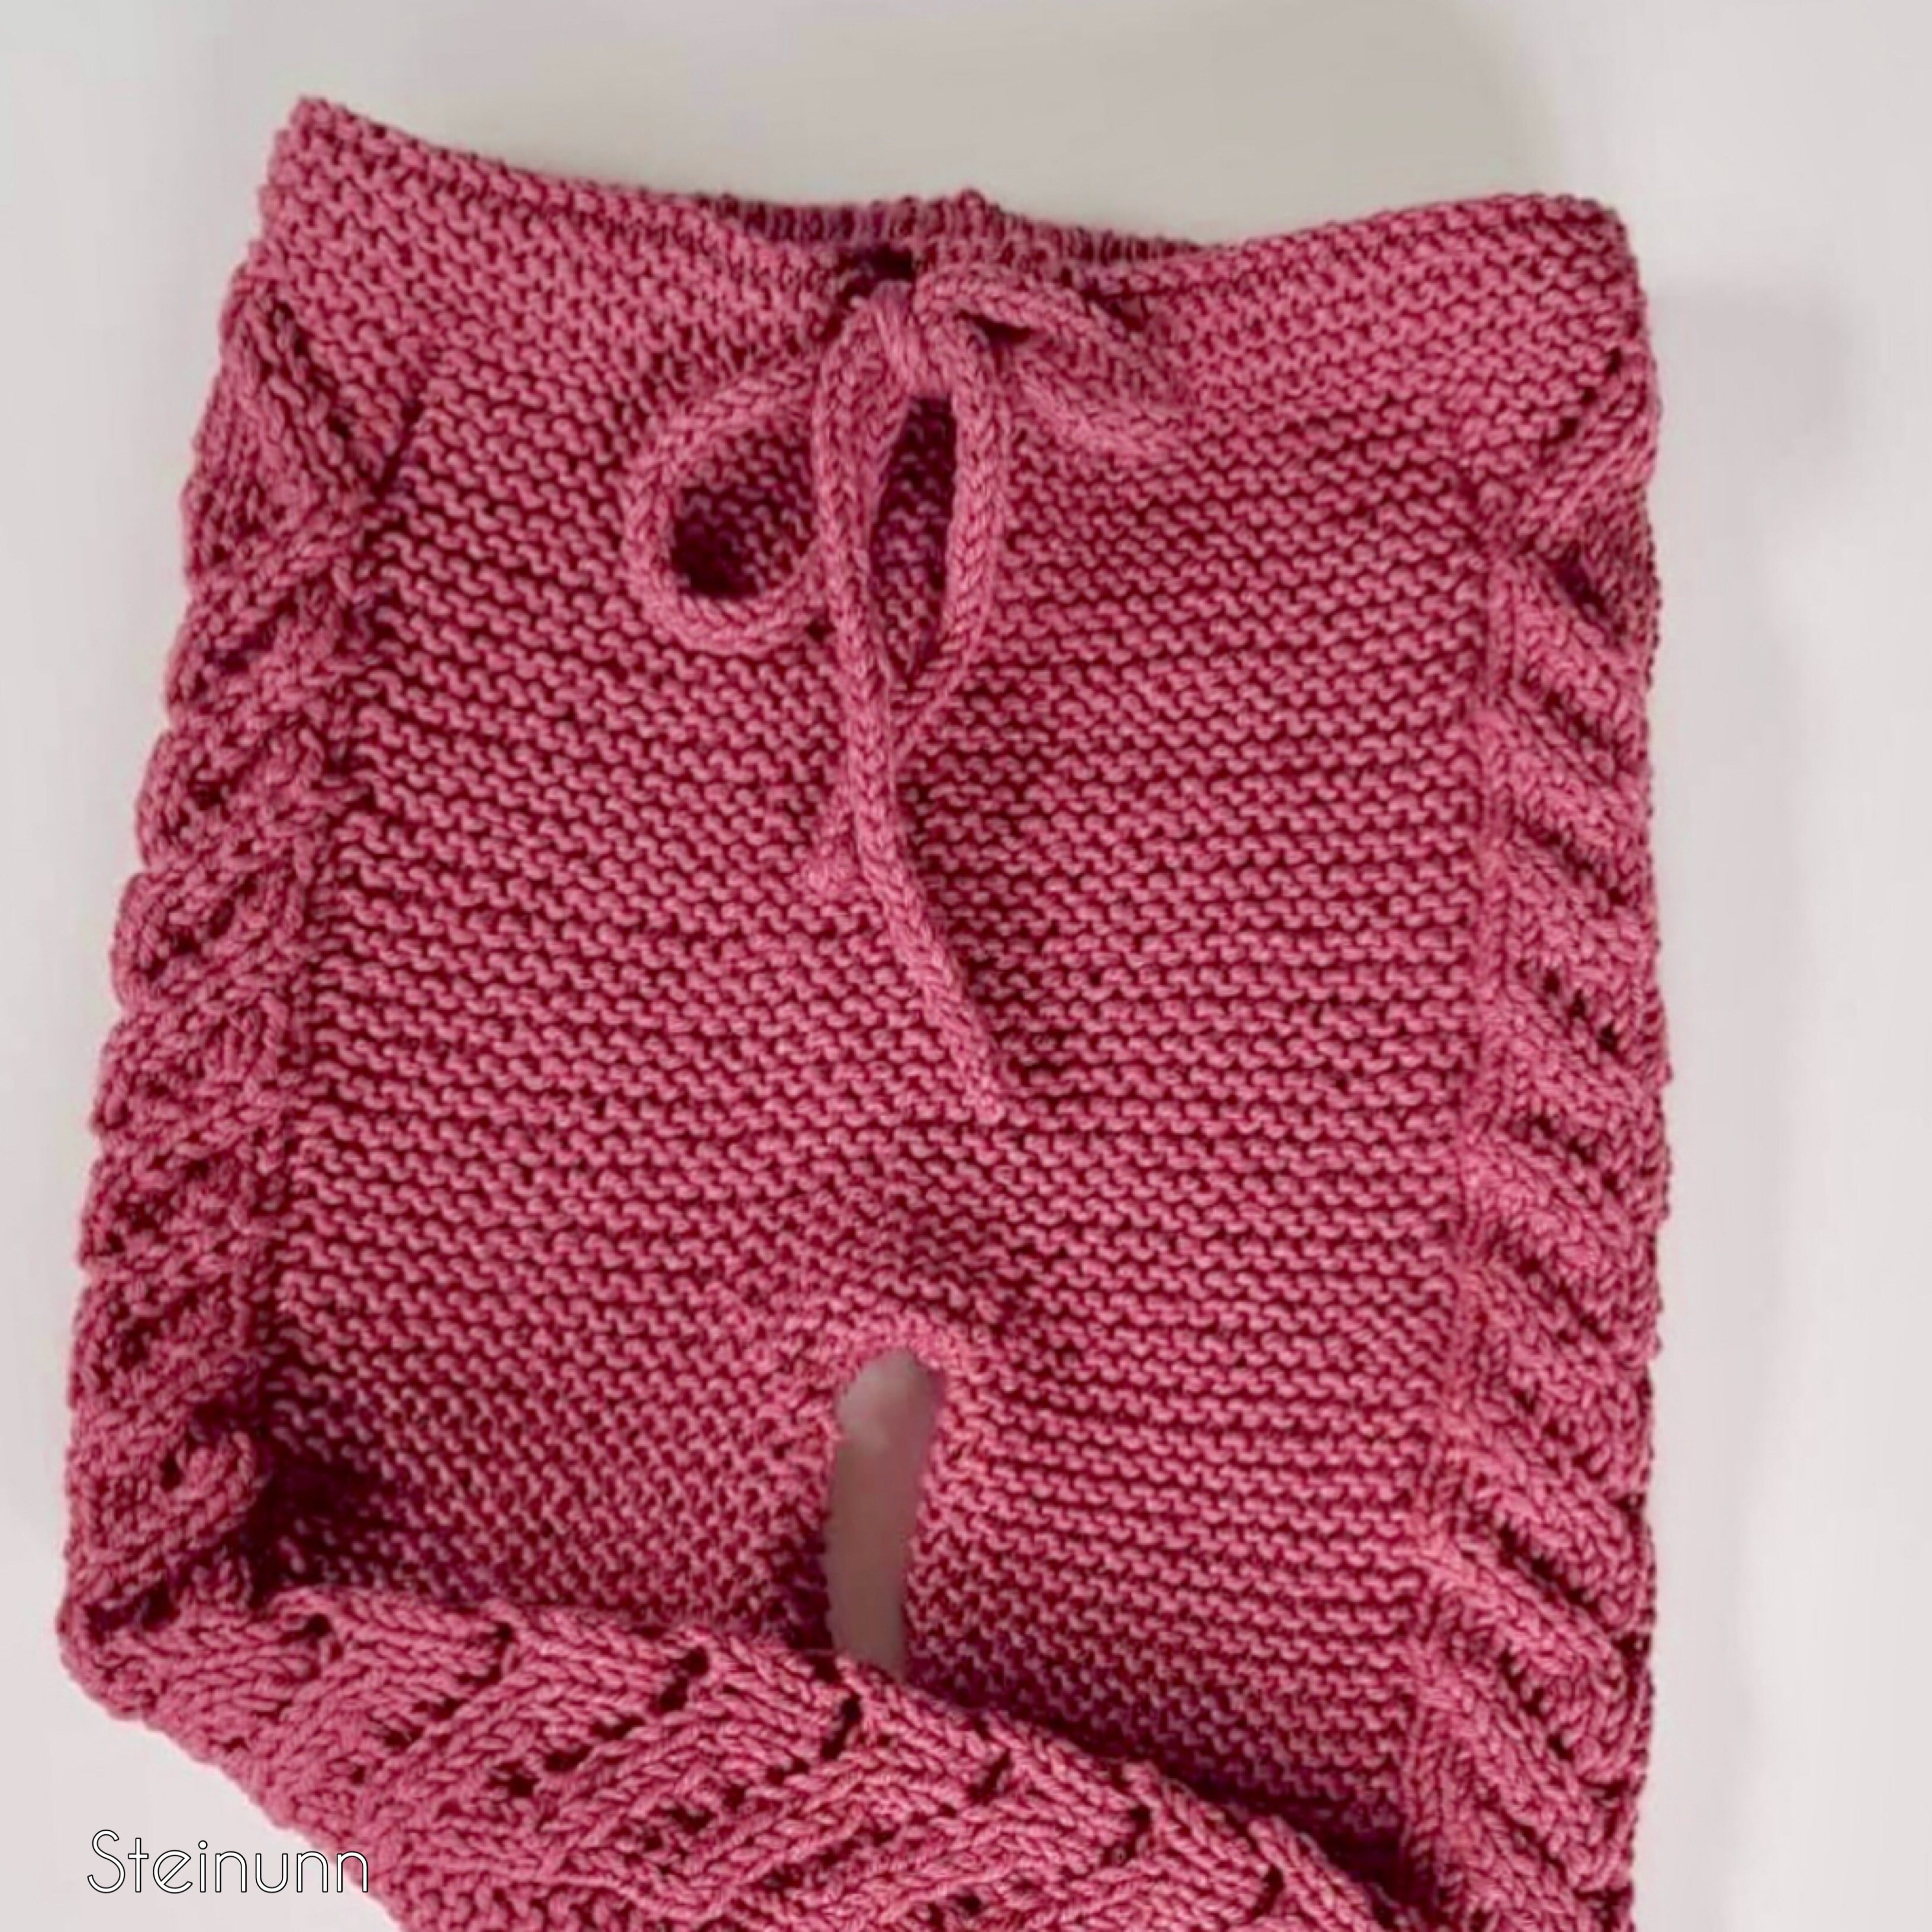 Júníana buxur Kind knitting 